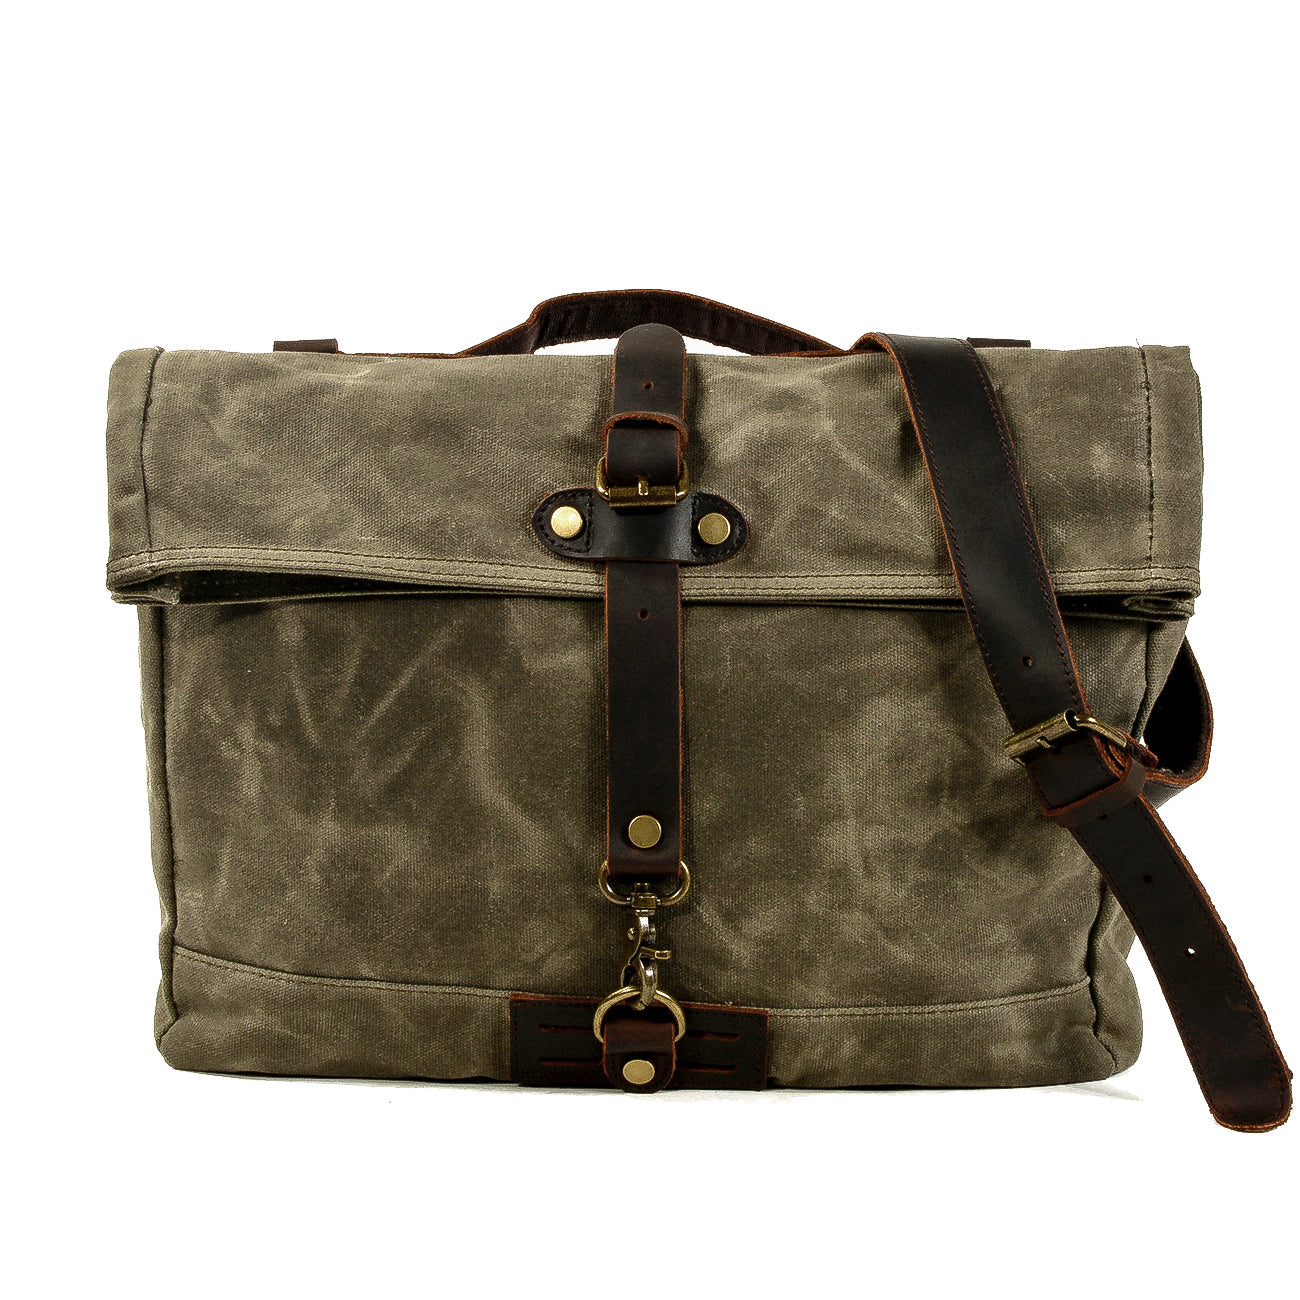 Buy Handbags for Women Shoulder Bags Tote Satchel Hobo 3pcs Purse Set at  Amazon.in